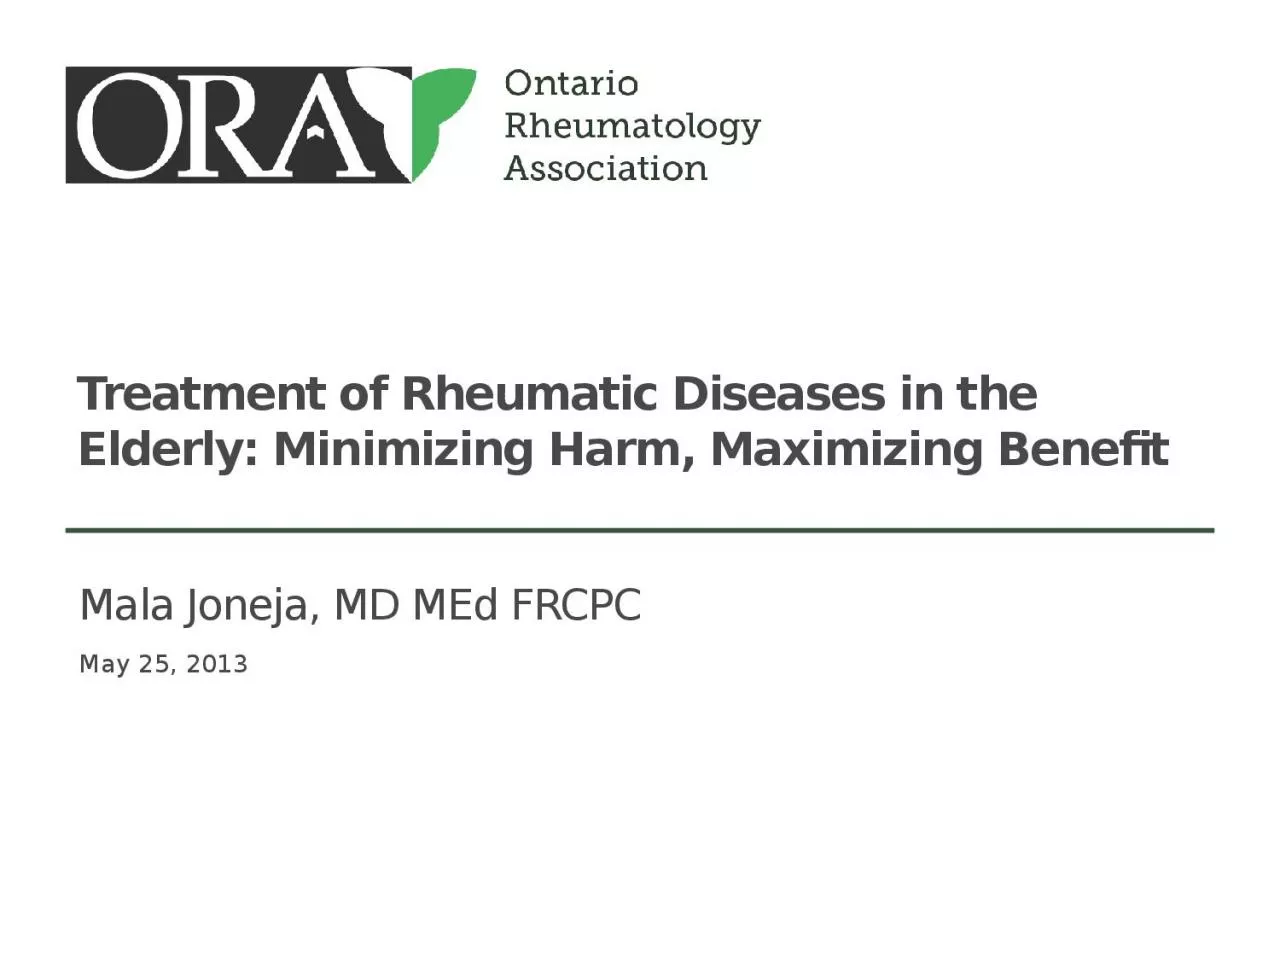 Treatment of Rheumatic Diseases in the Elderly: Minimizing Harm, Maximizing Benefit